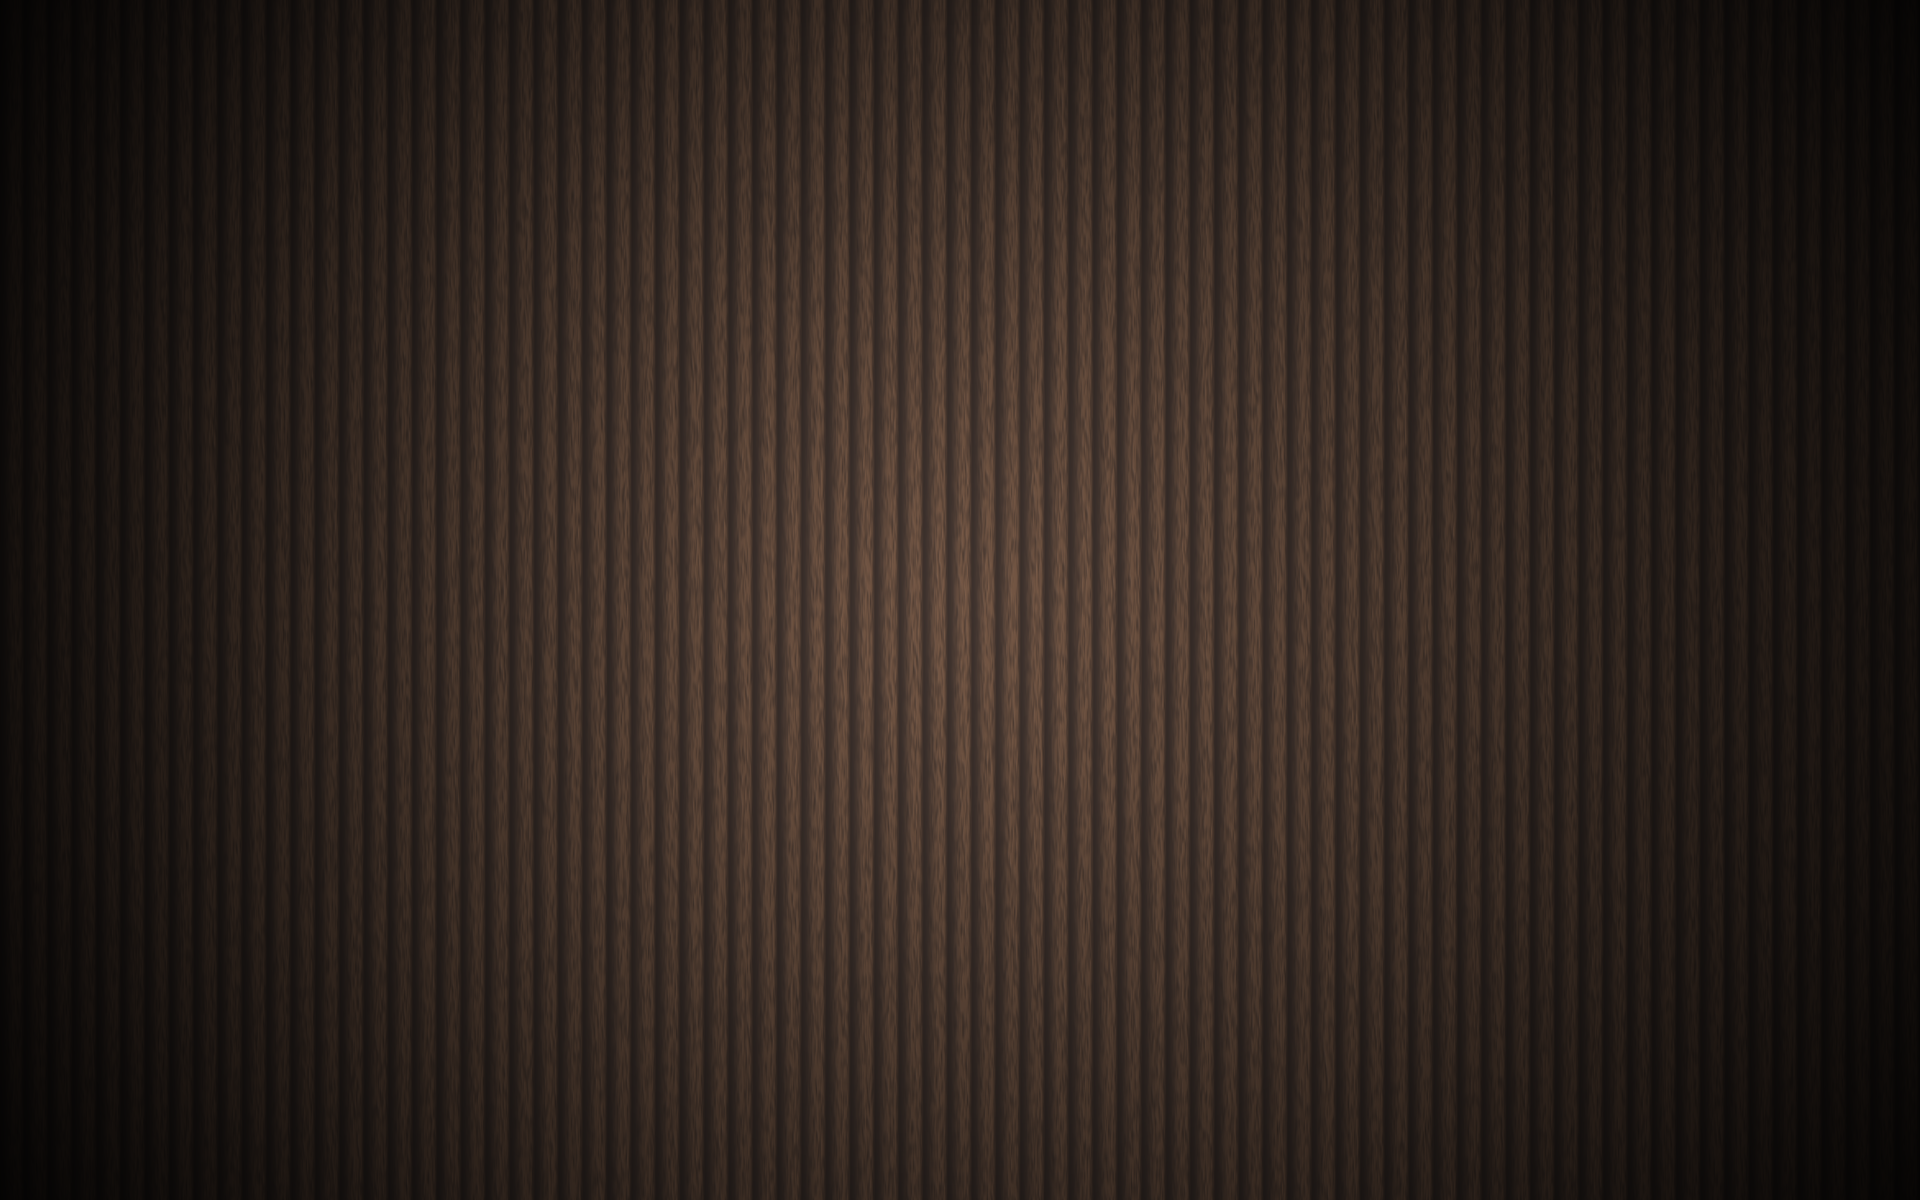 Minimalistic patterns striped texture brown wallpaper background